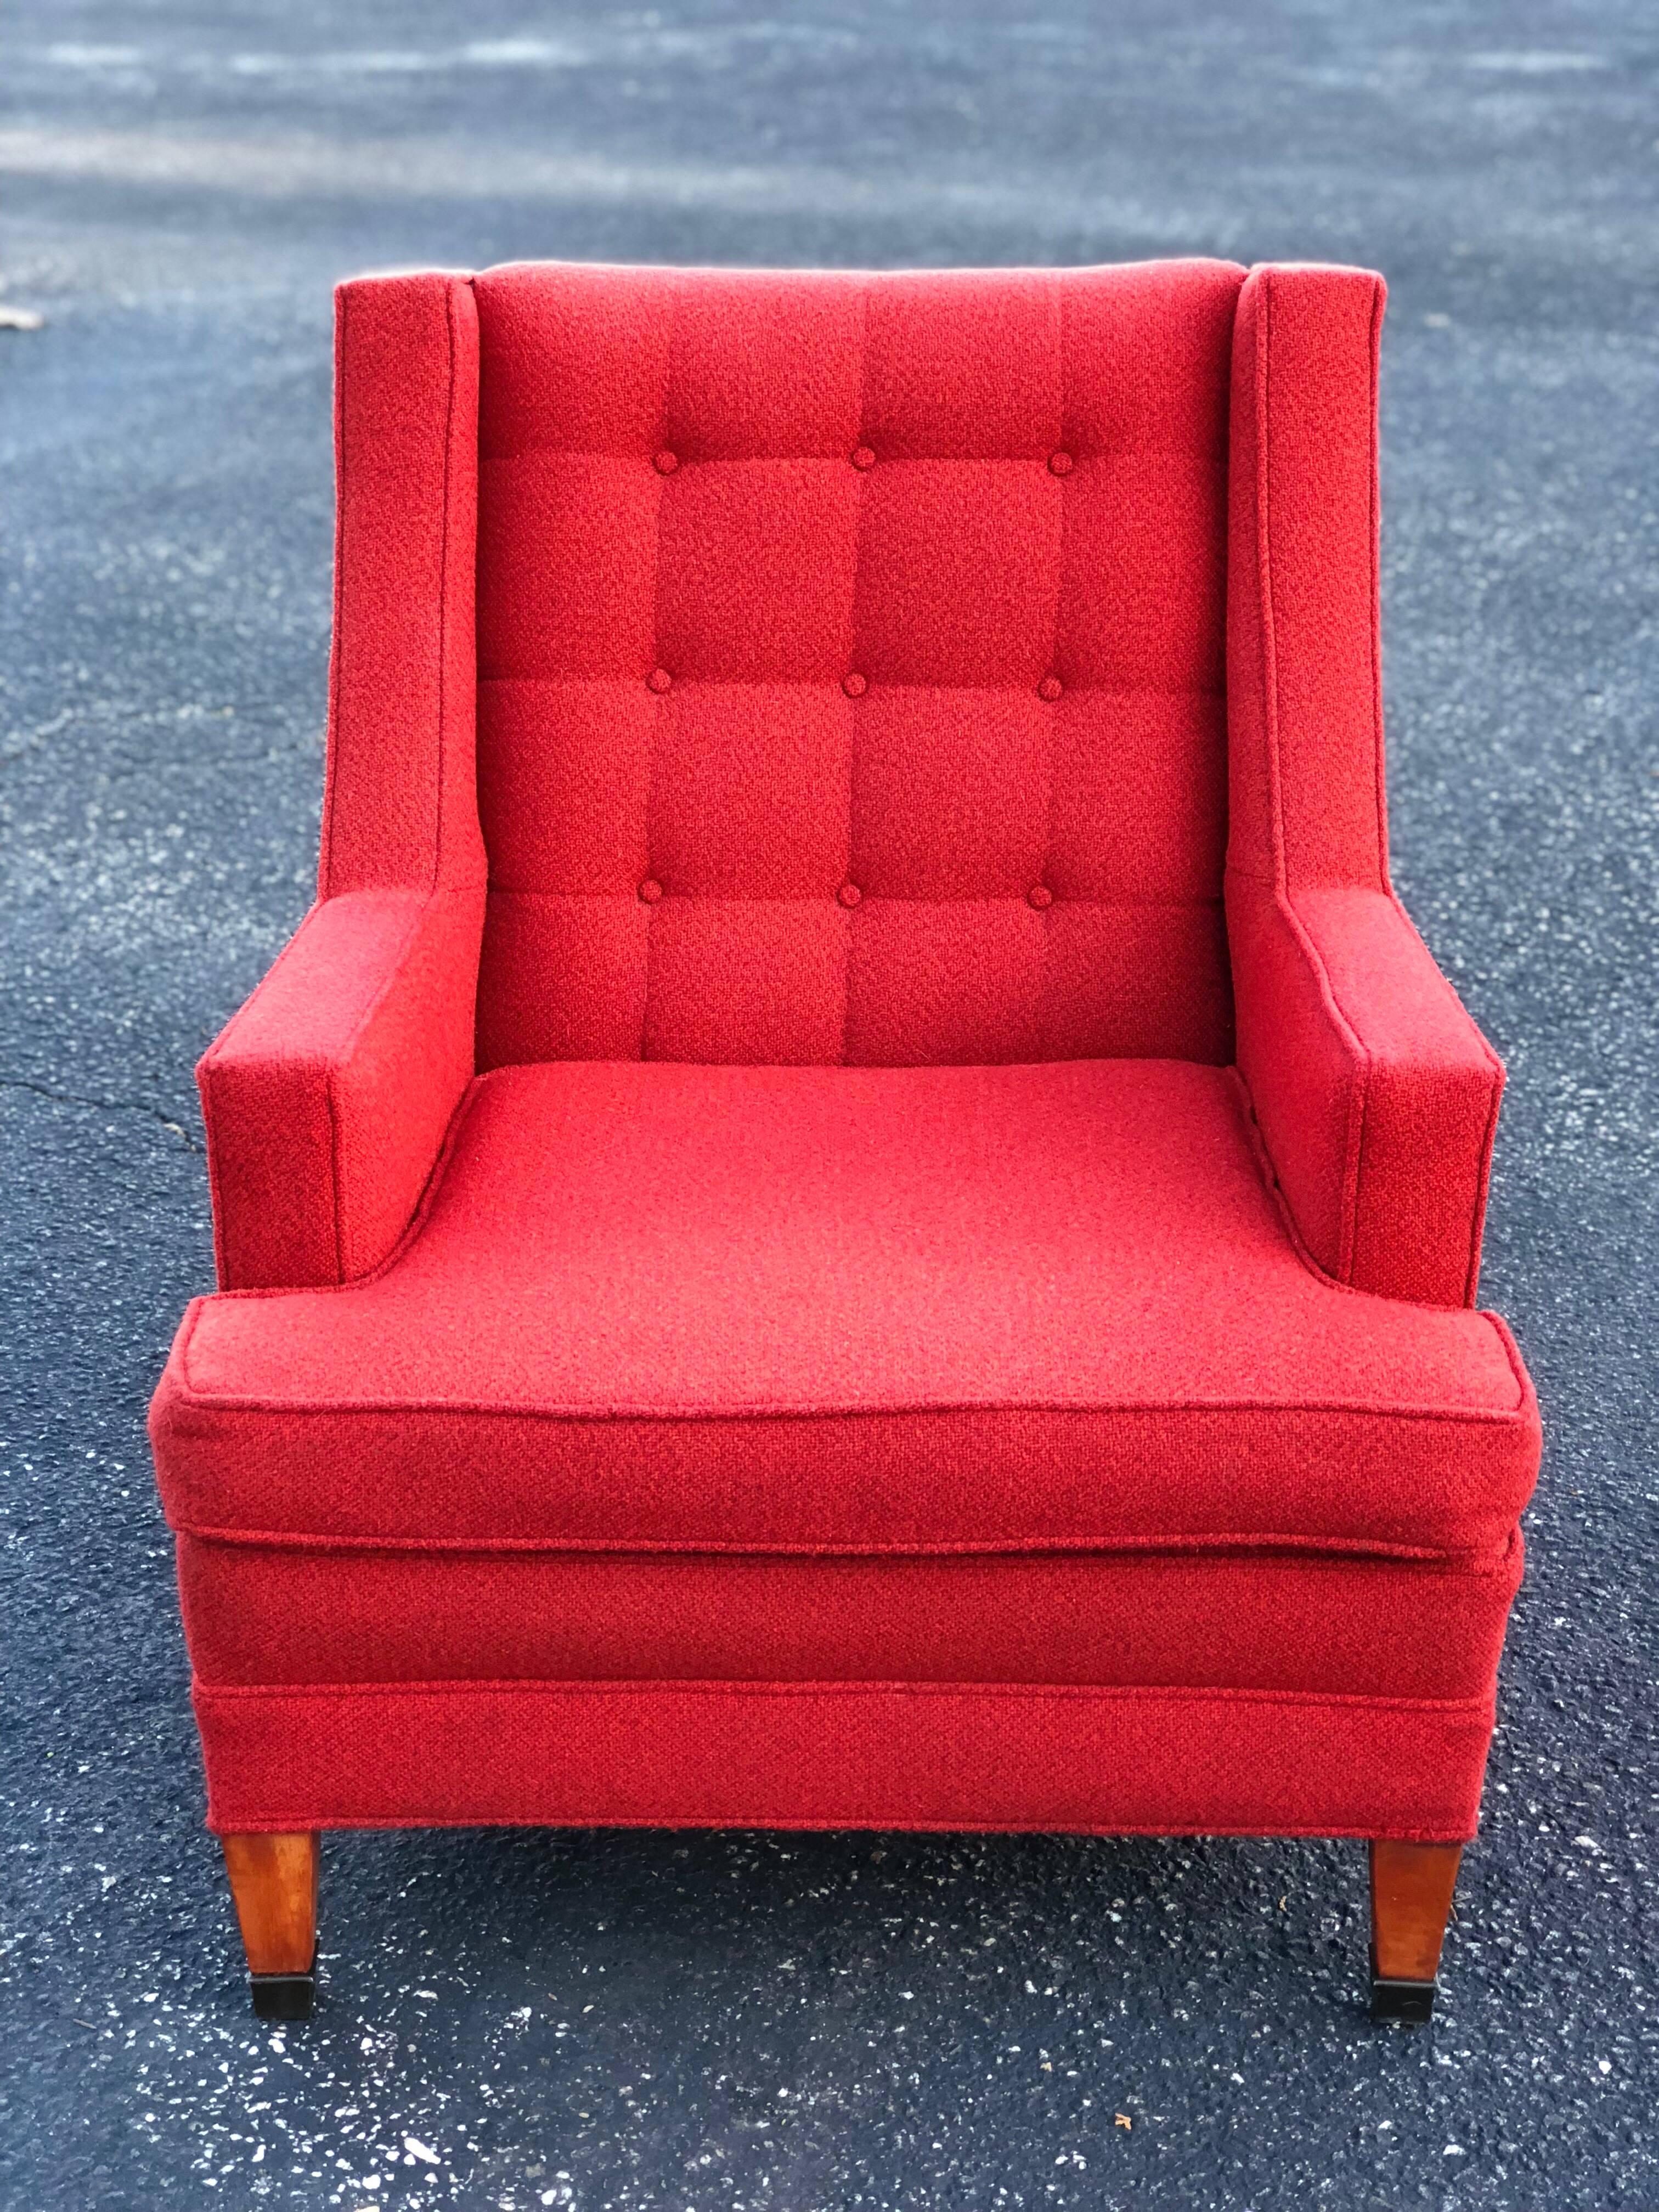 mid century modern red chair